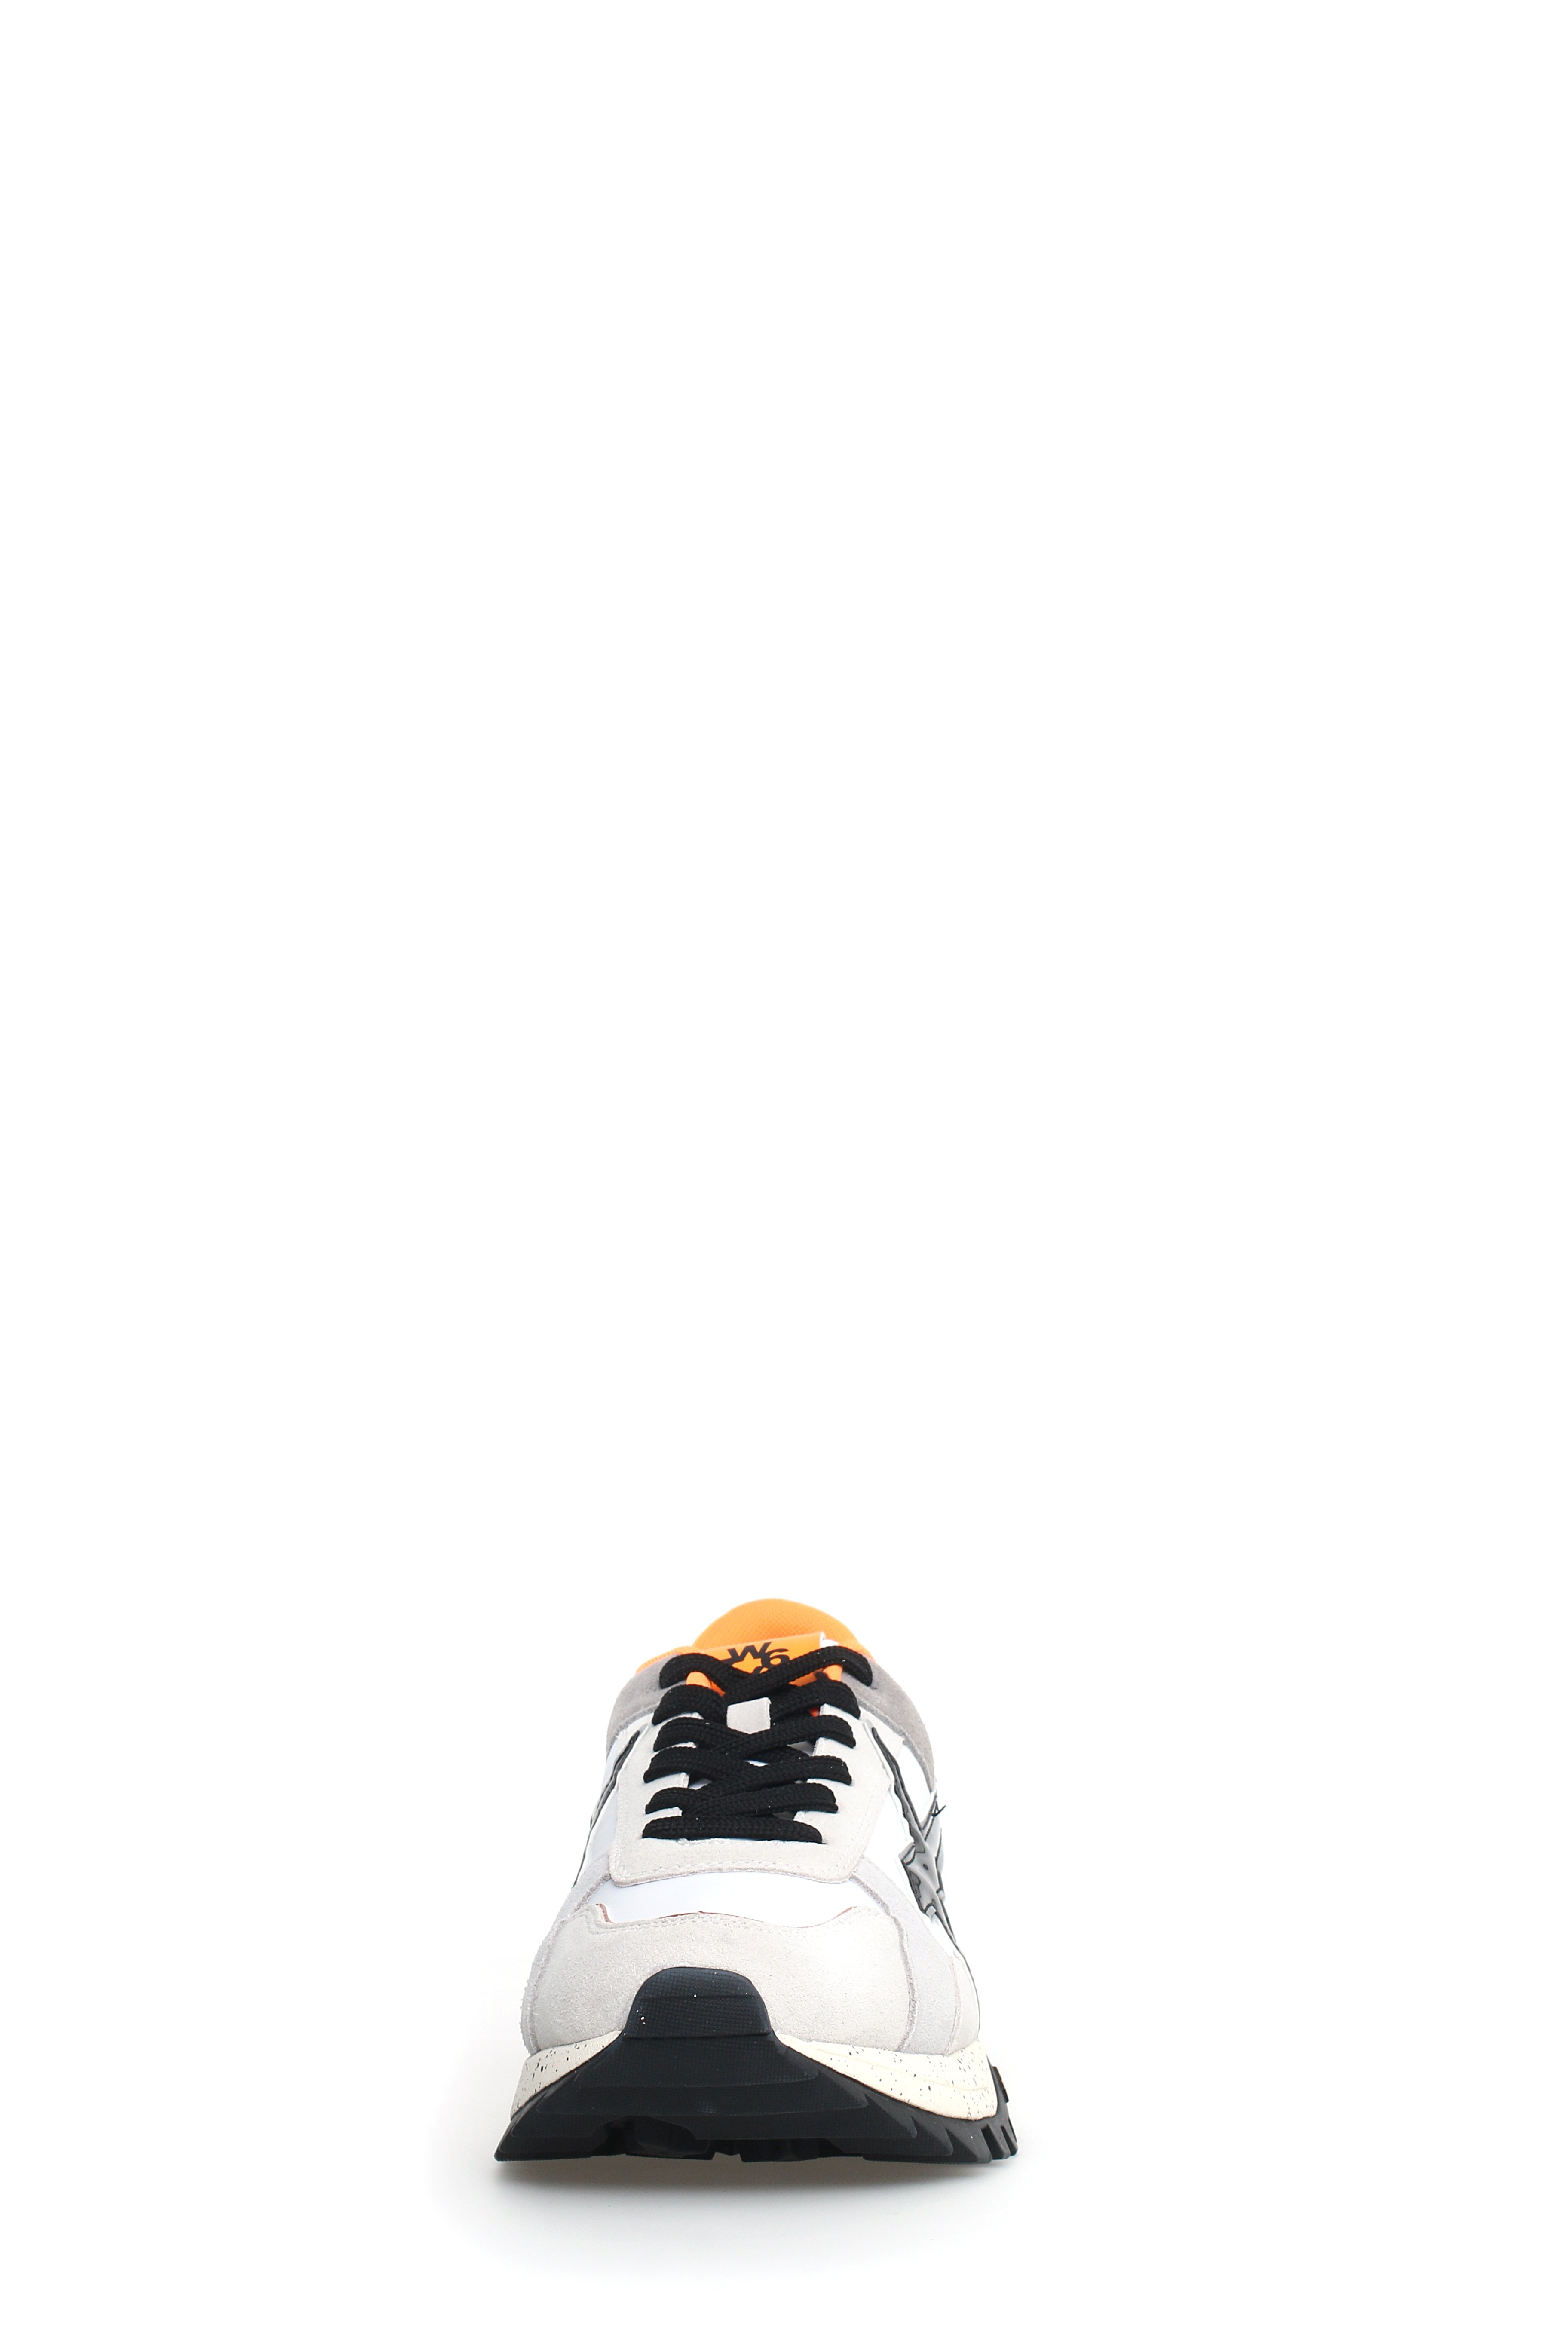 W6YZ-Sneaker Uomo K3 M-White Grey Black